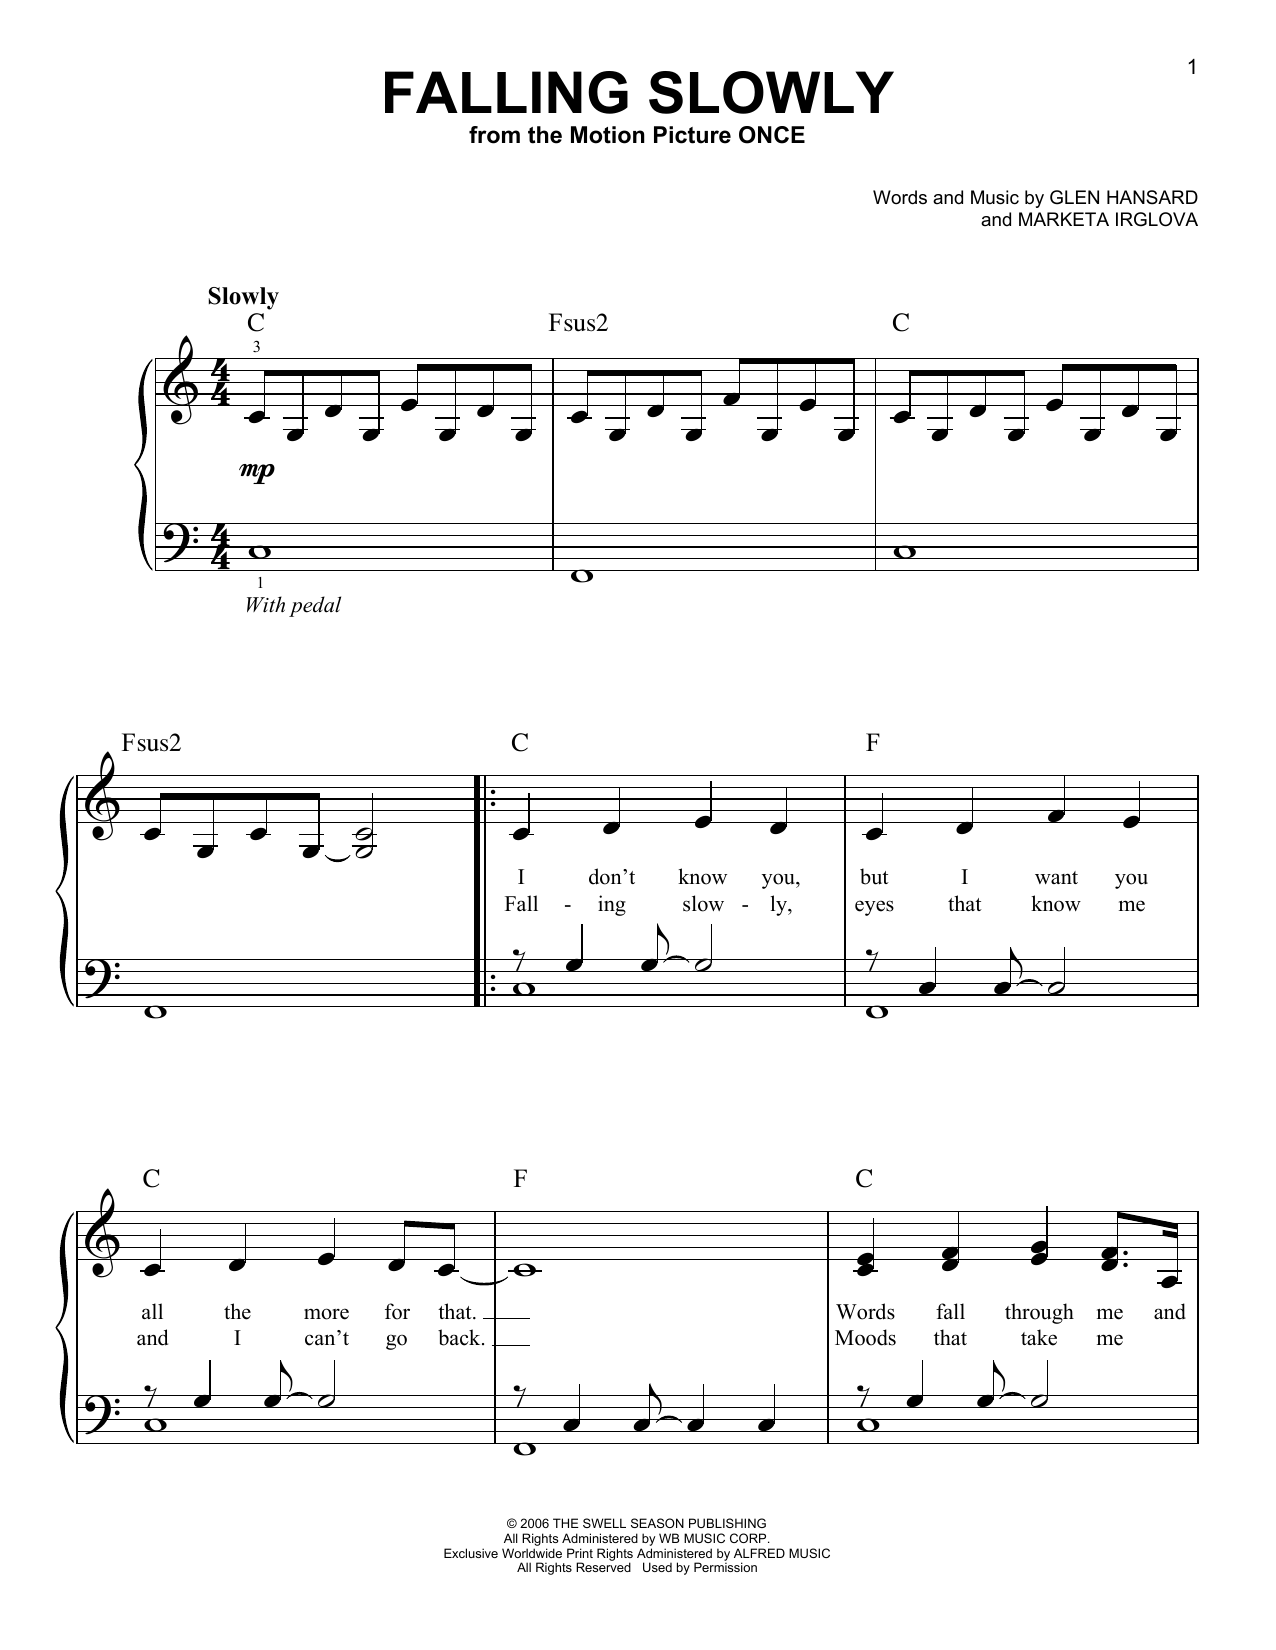 Glen Hansard & Marketa Irglova Falling Slowly (from Once) Sheet Music Notes & Chords for Guitar Lead Sheet - Download or Print PDF